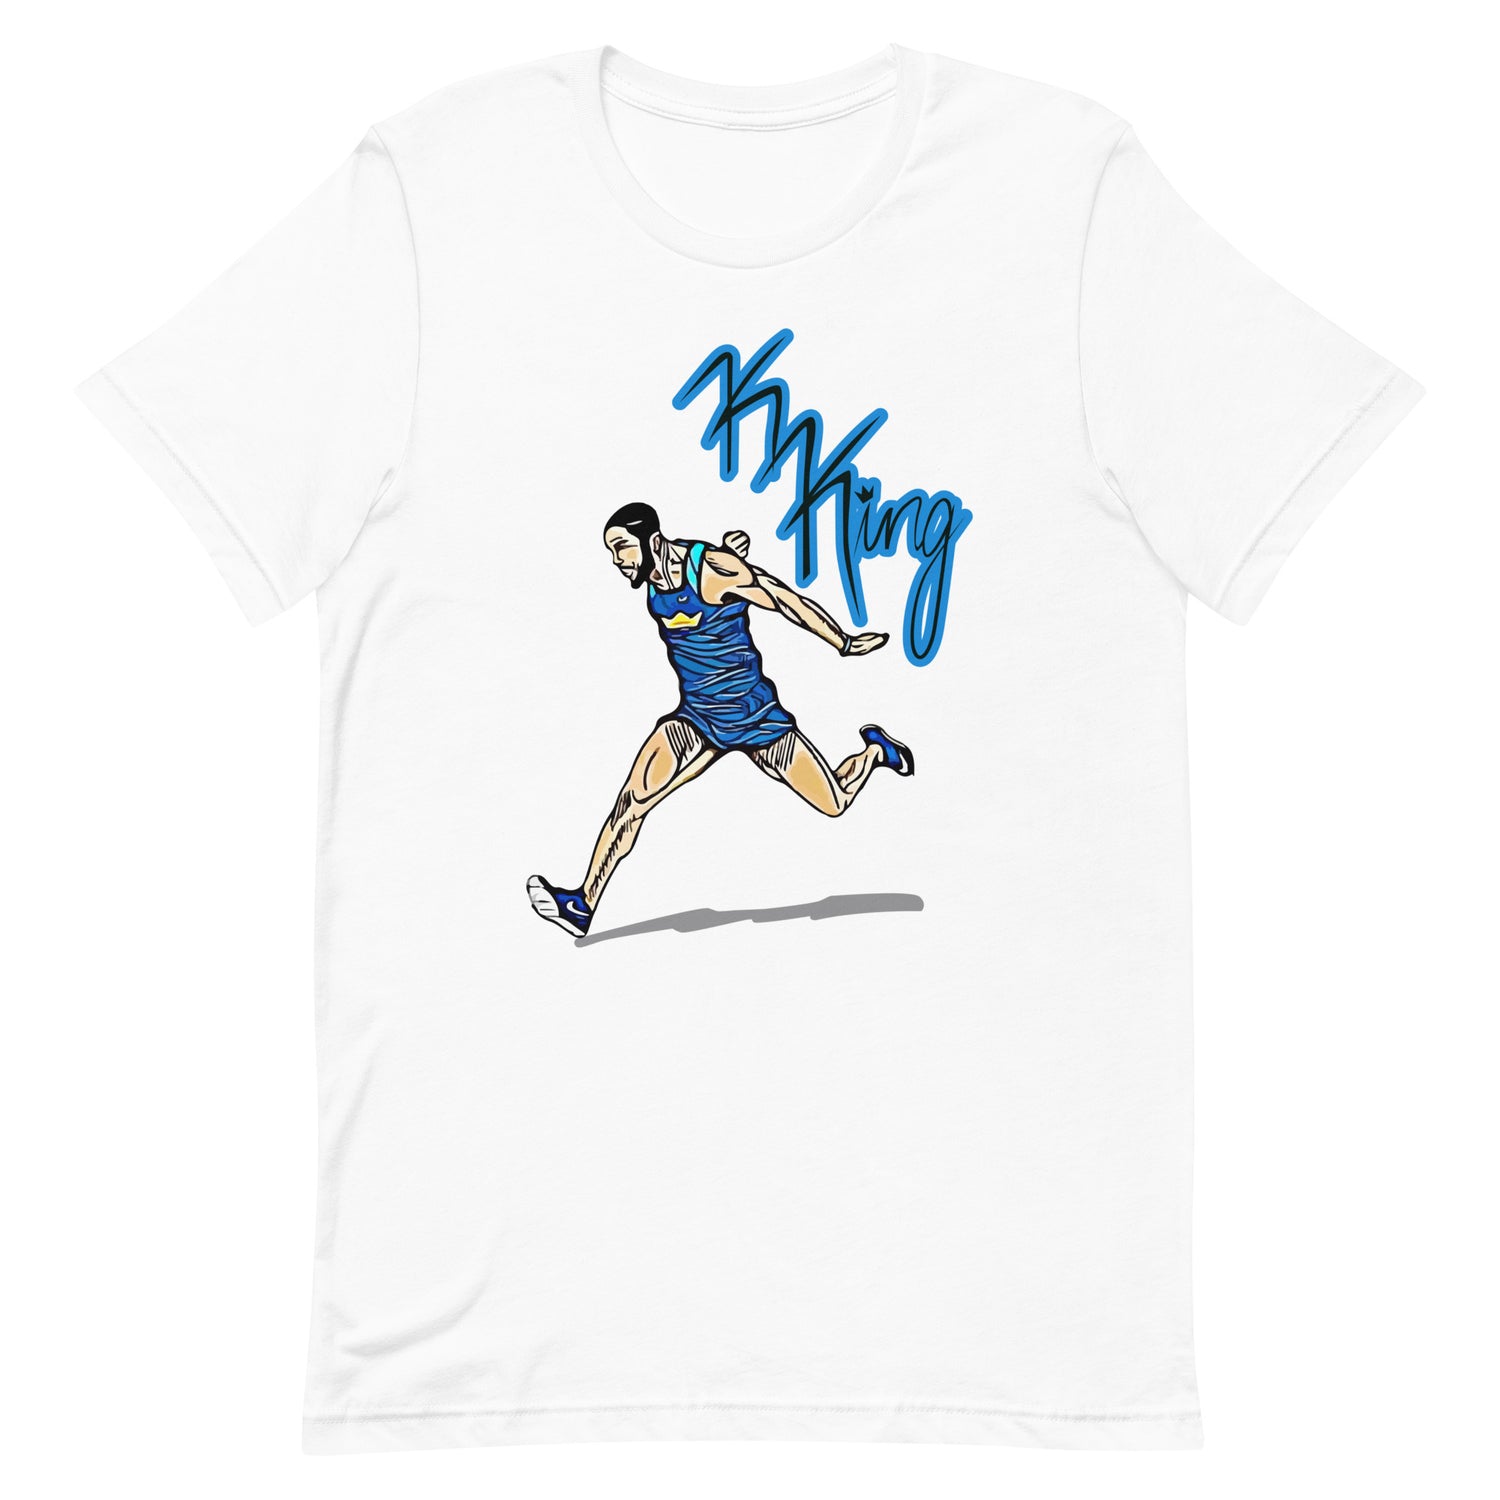 Kyree King "Electric" t-shirt - Fan Arch